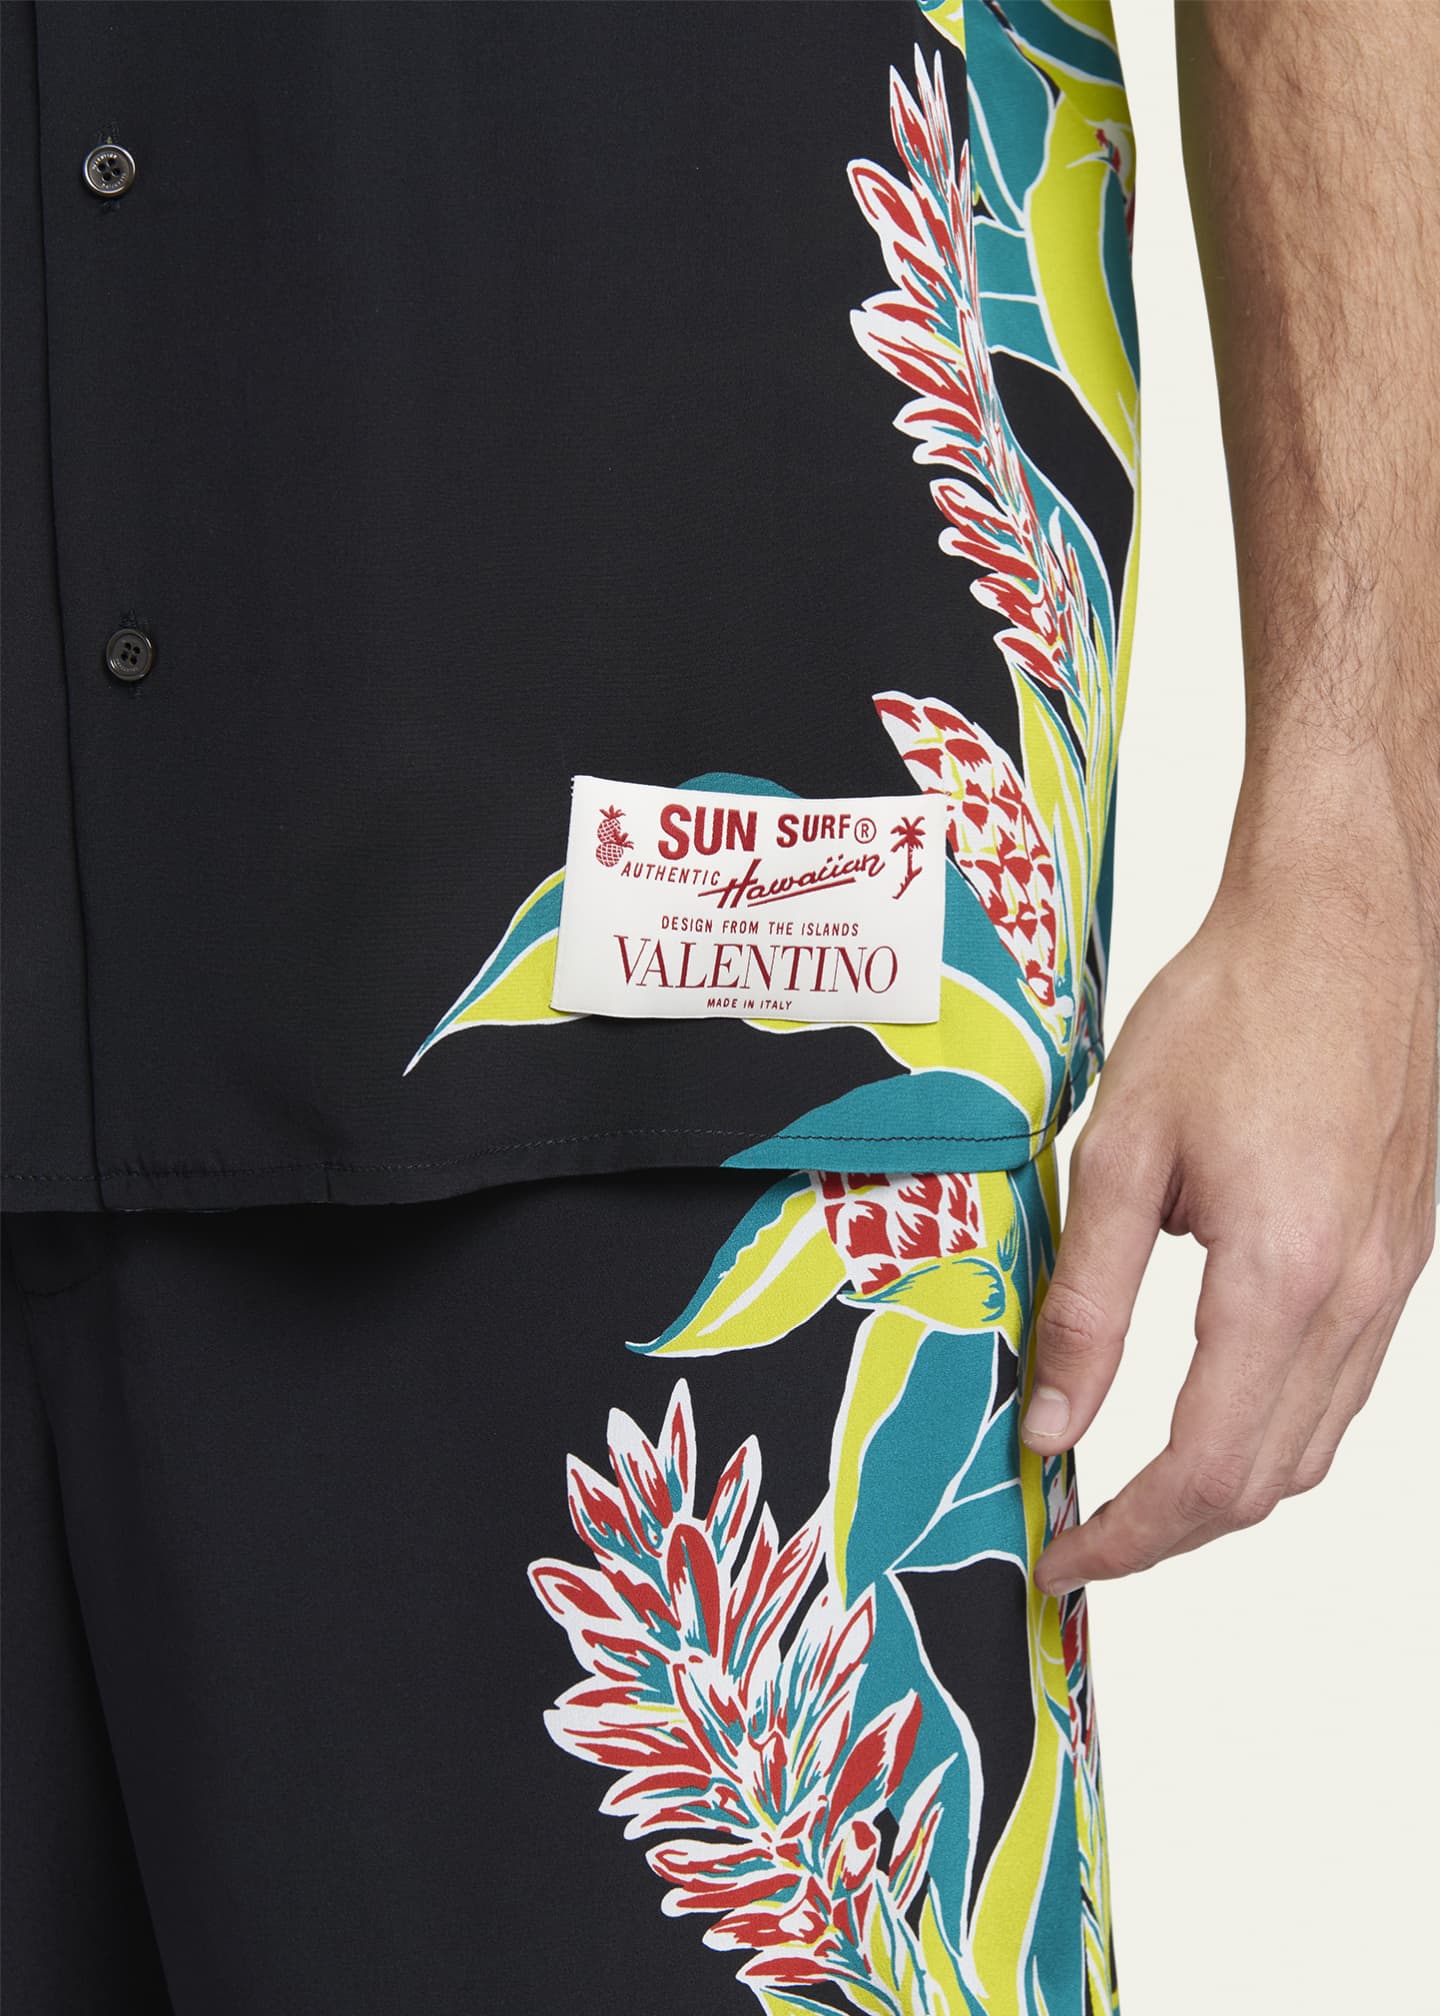 Valentino Garavani Sun Surf Volcano Shirt - Bergdorf Goodman